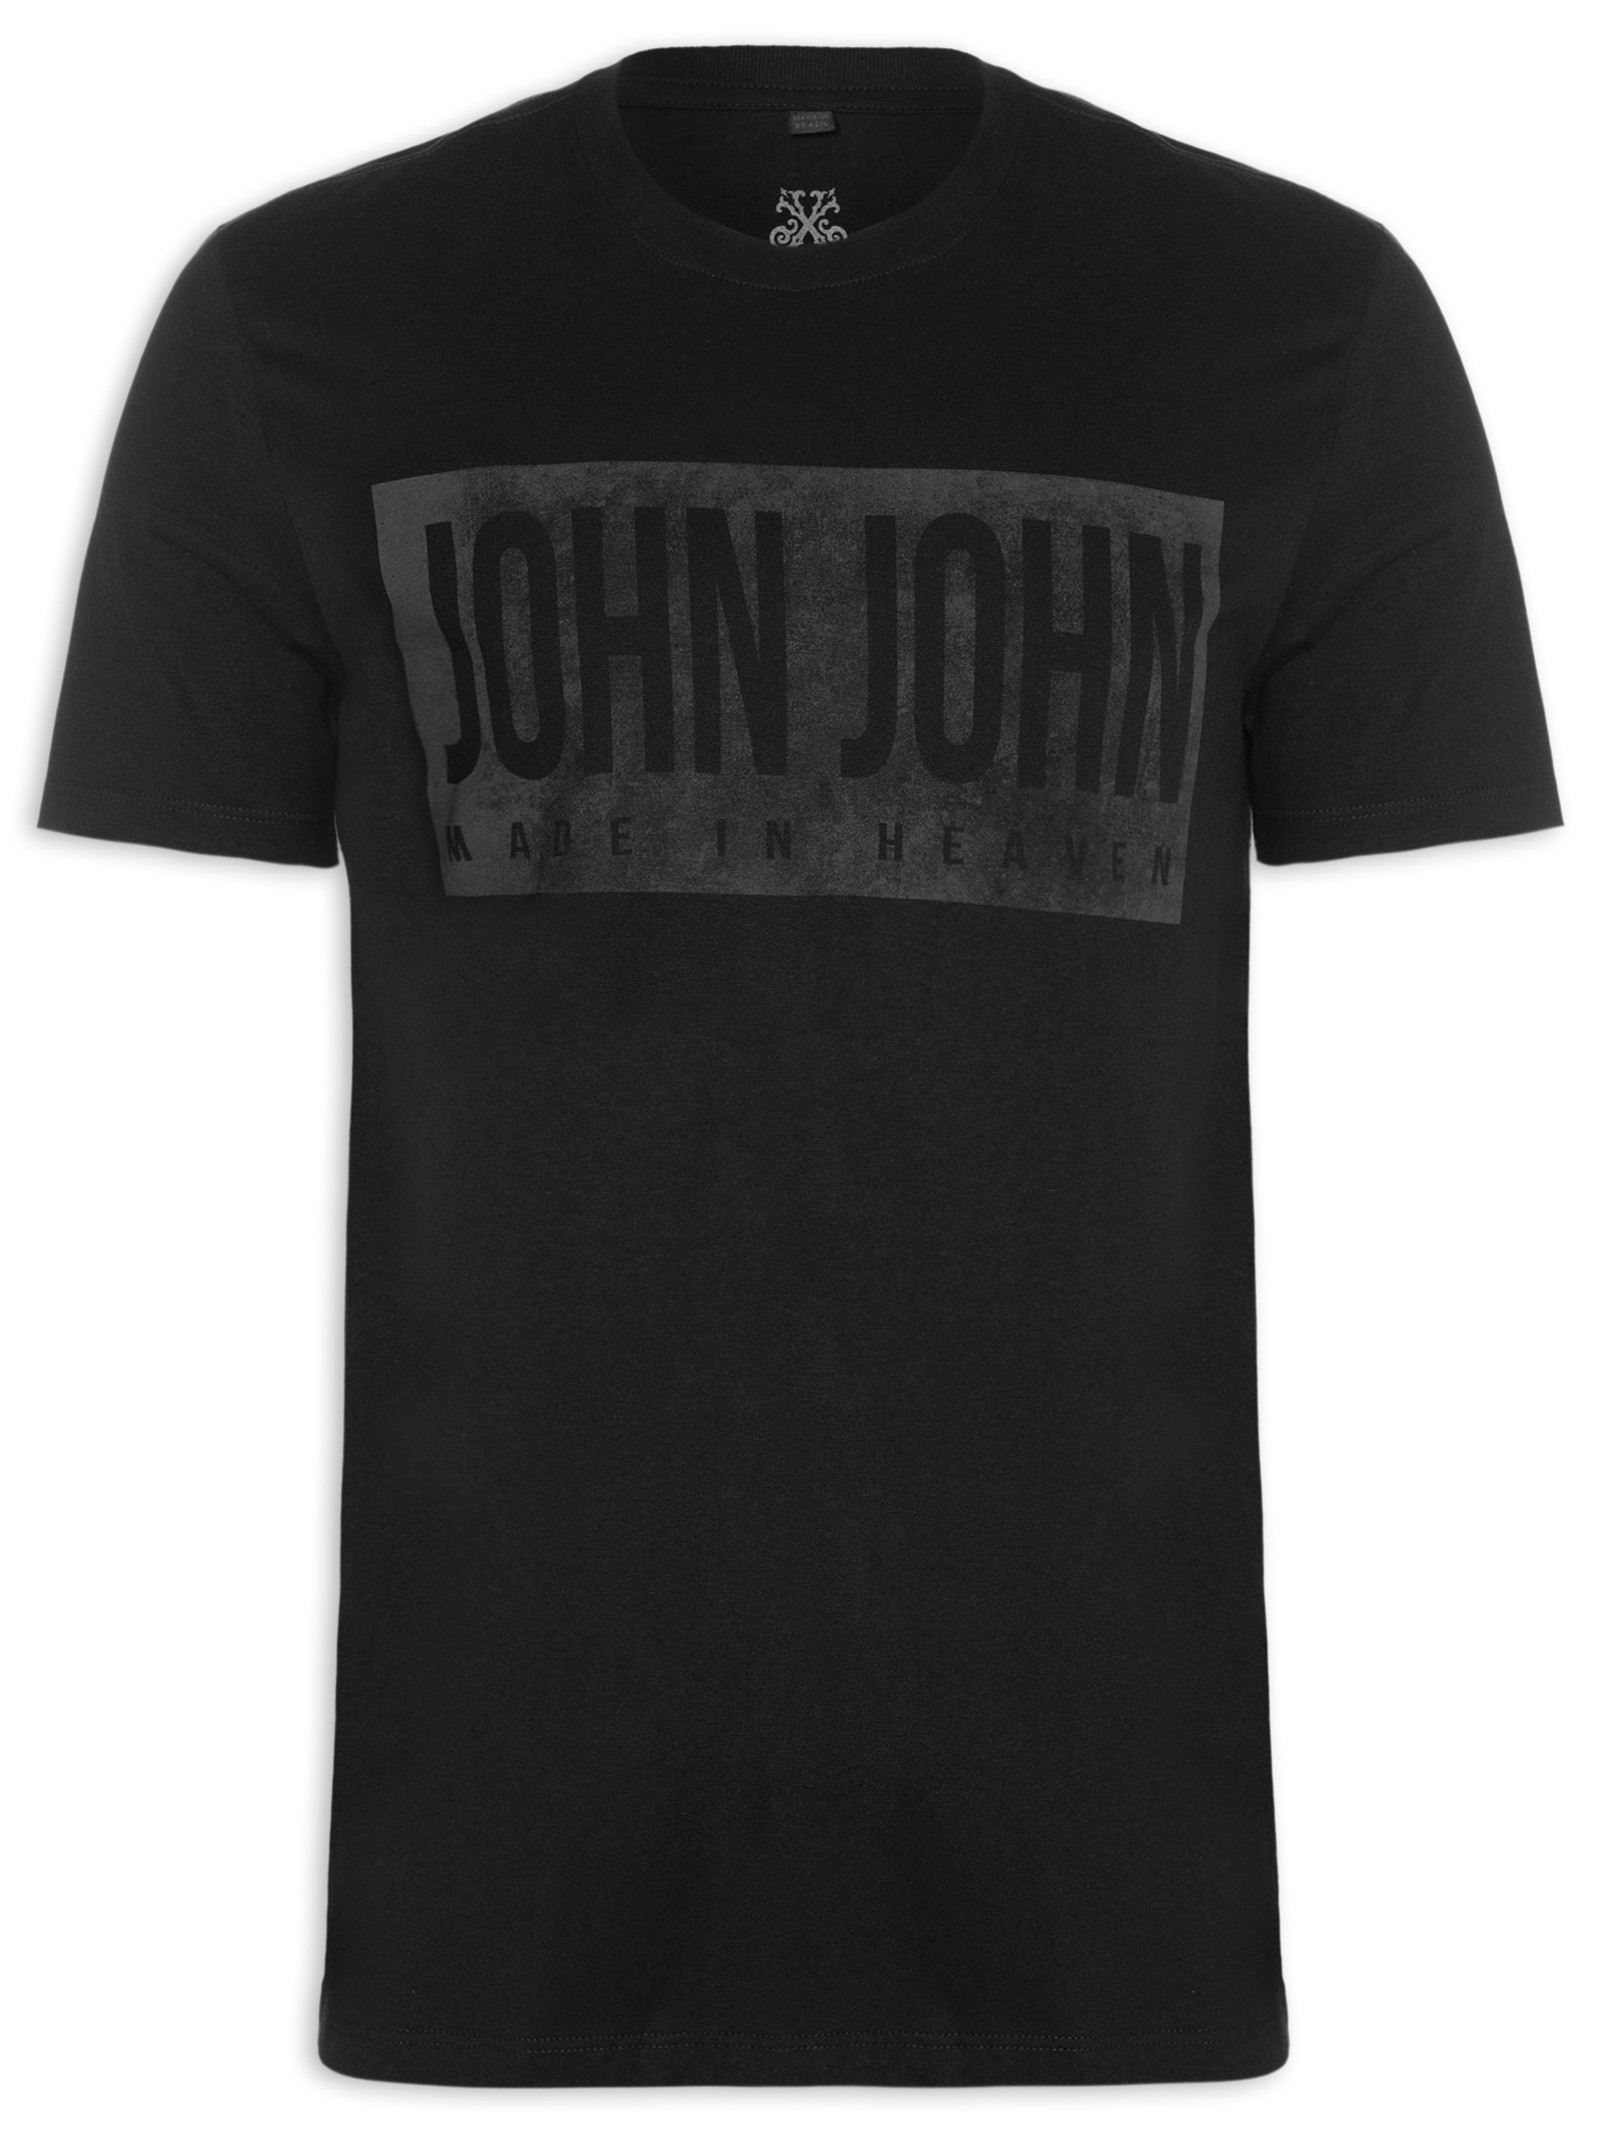 Camiseta John John Estampada Manga Curta Feminina - Preto